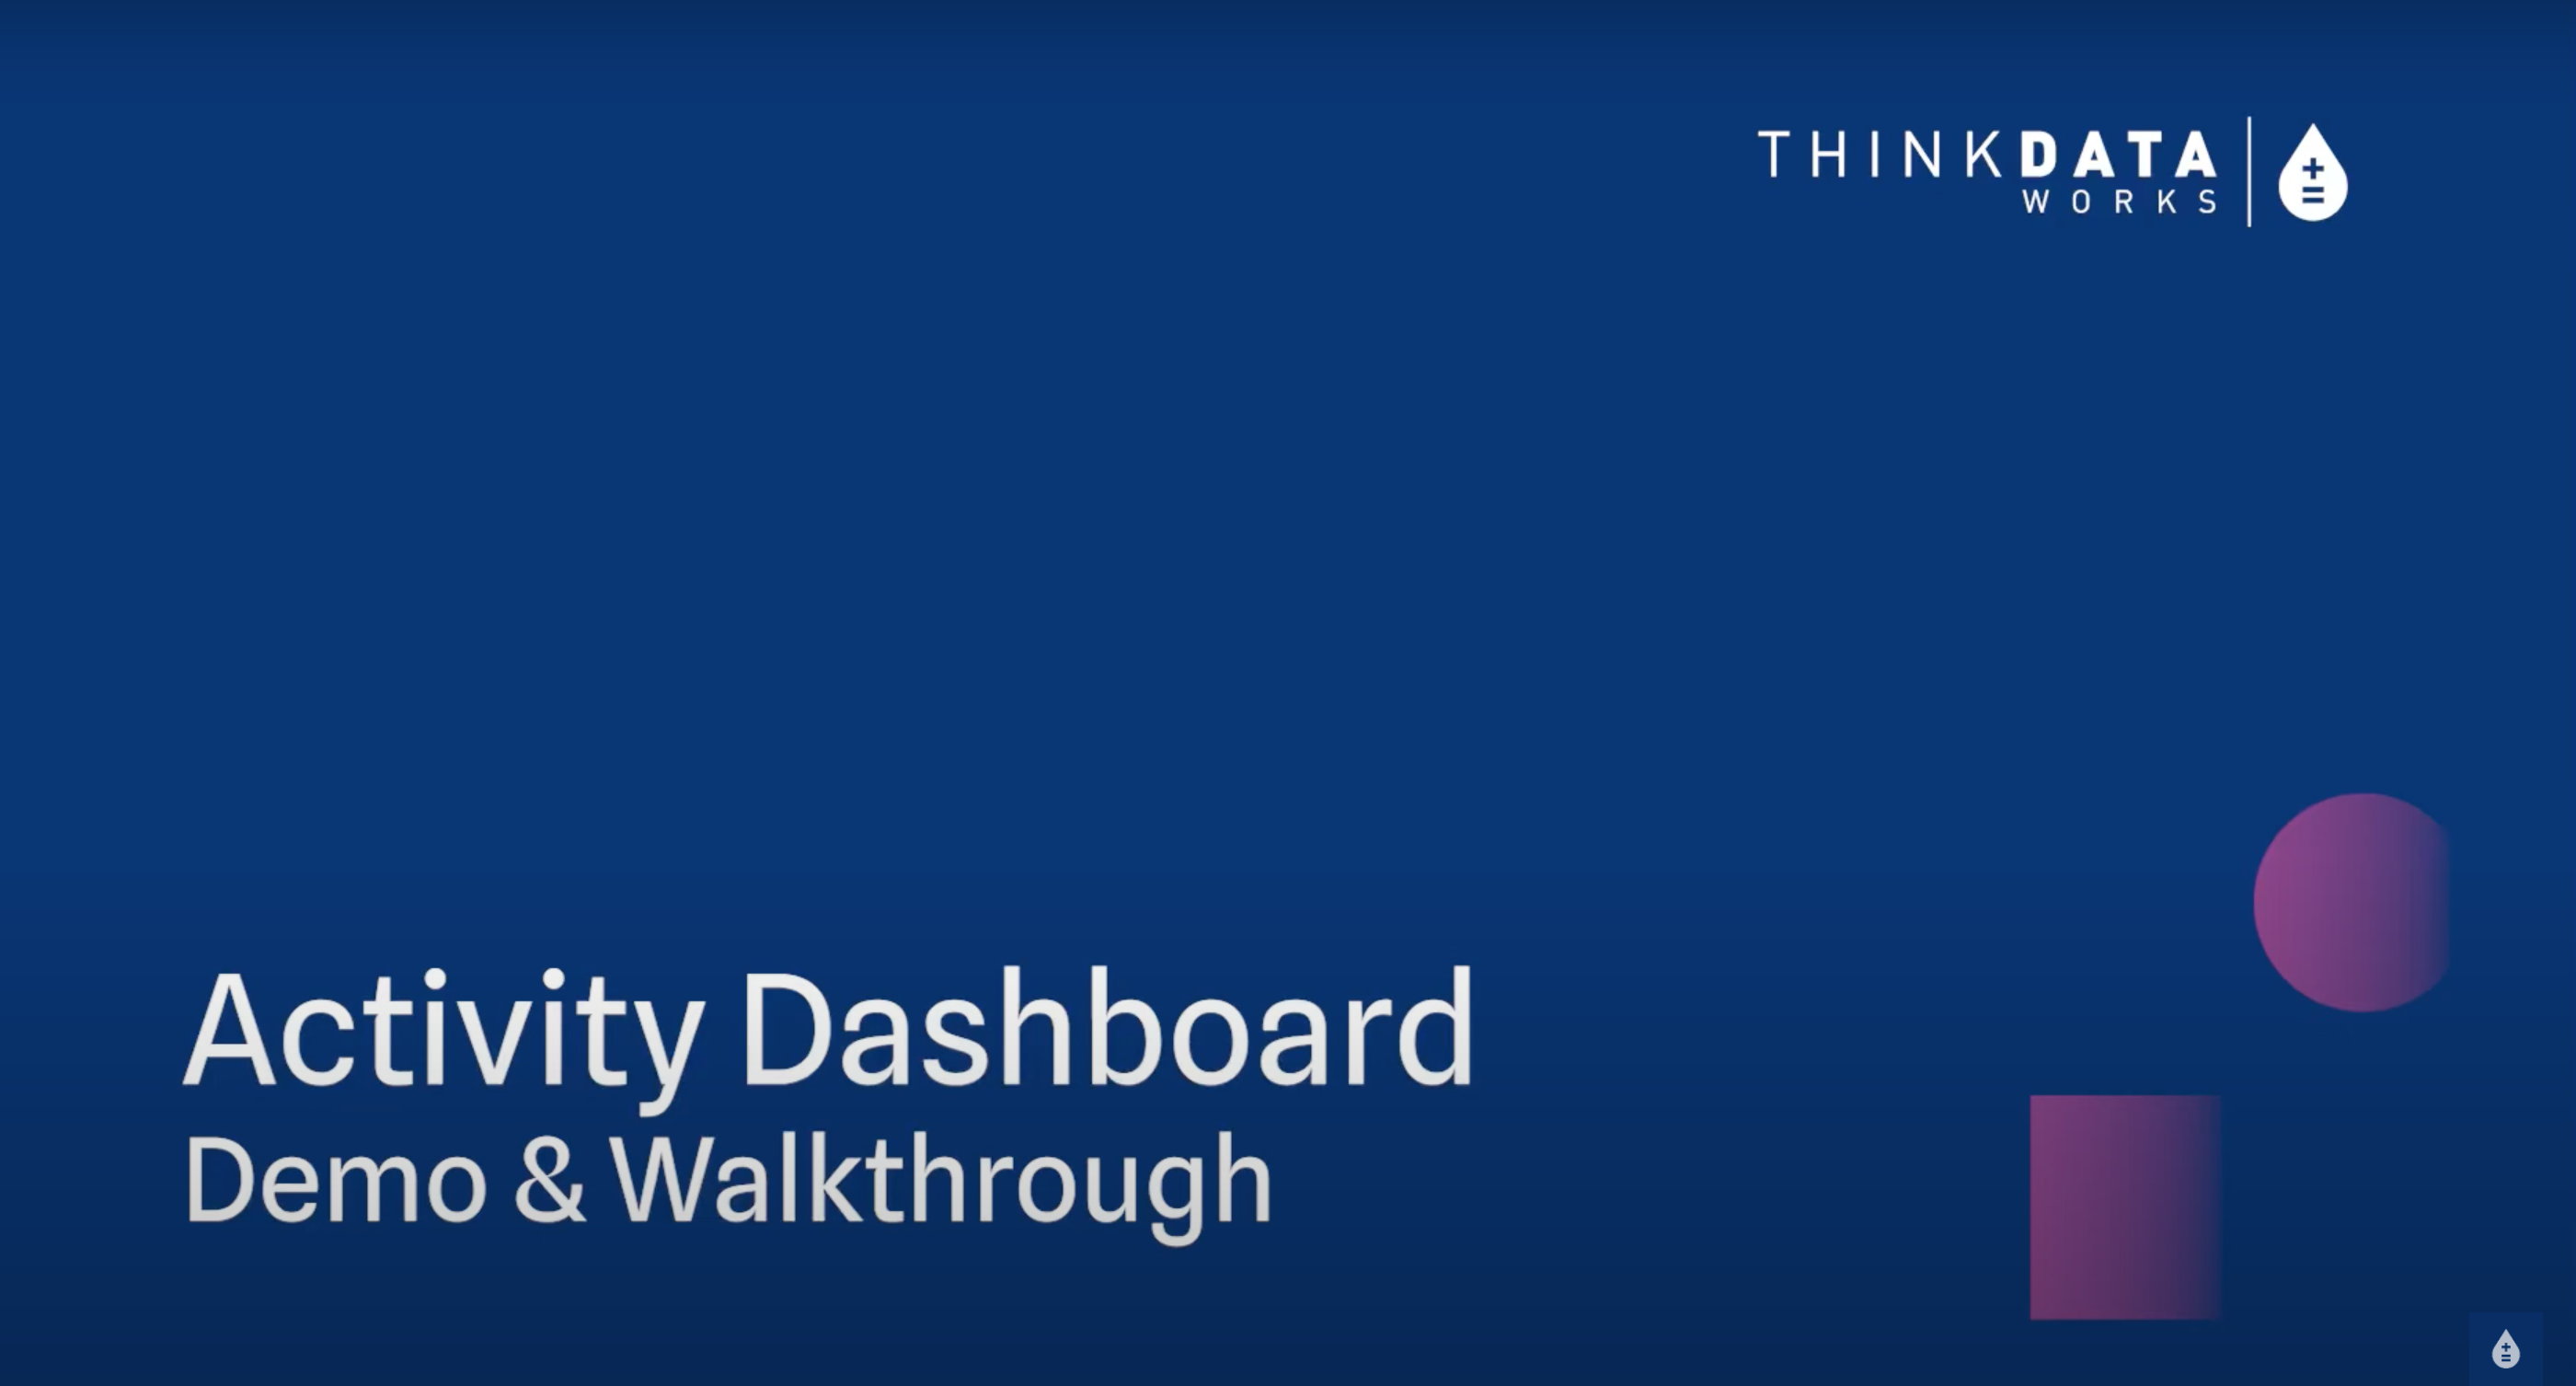 Activity dashboard demo and walkthrough video